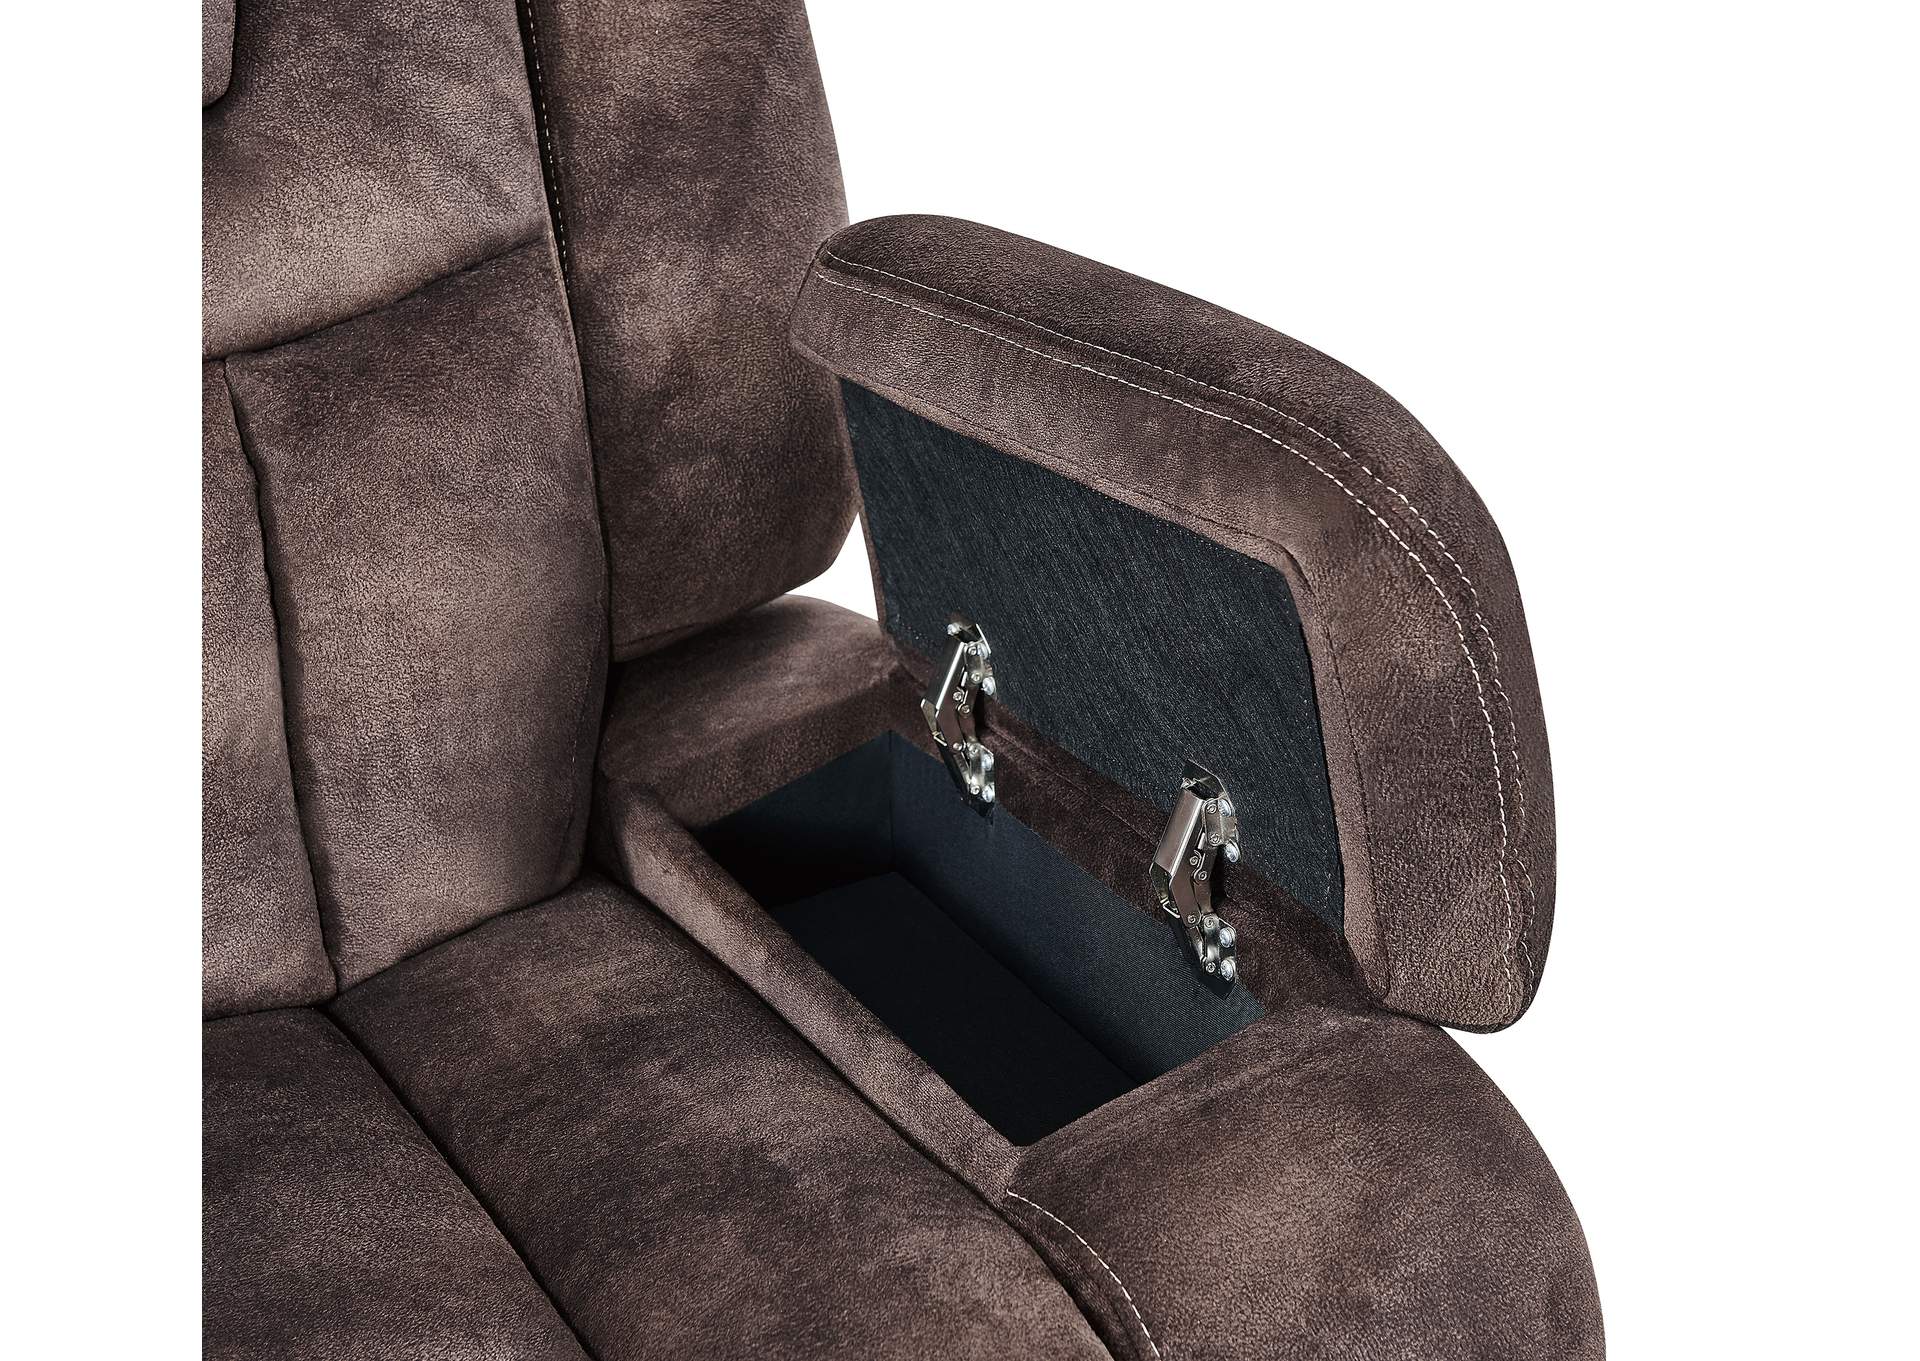 Chocolate Power Reclining Sofa W/ DDT, Power Headrest, & Usb,Global Furniture USA